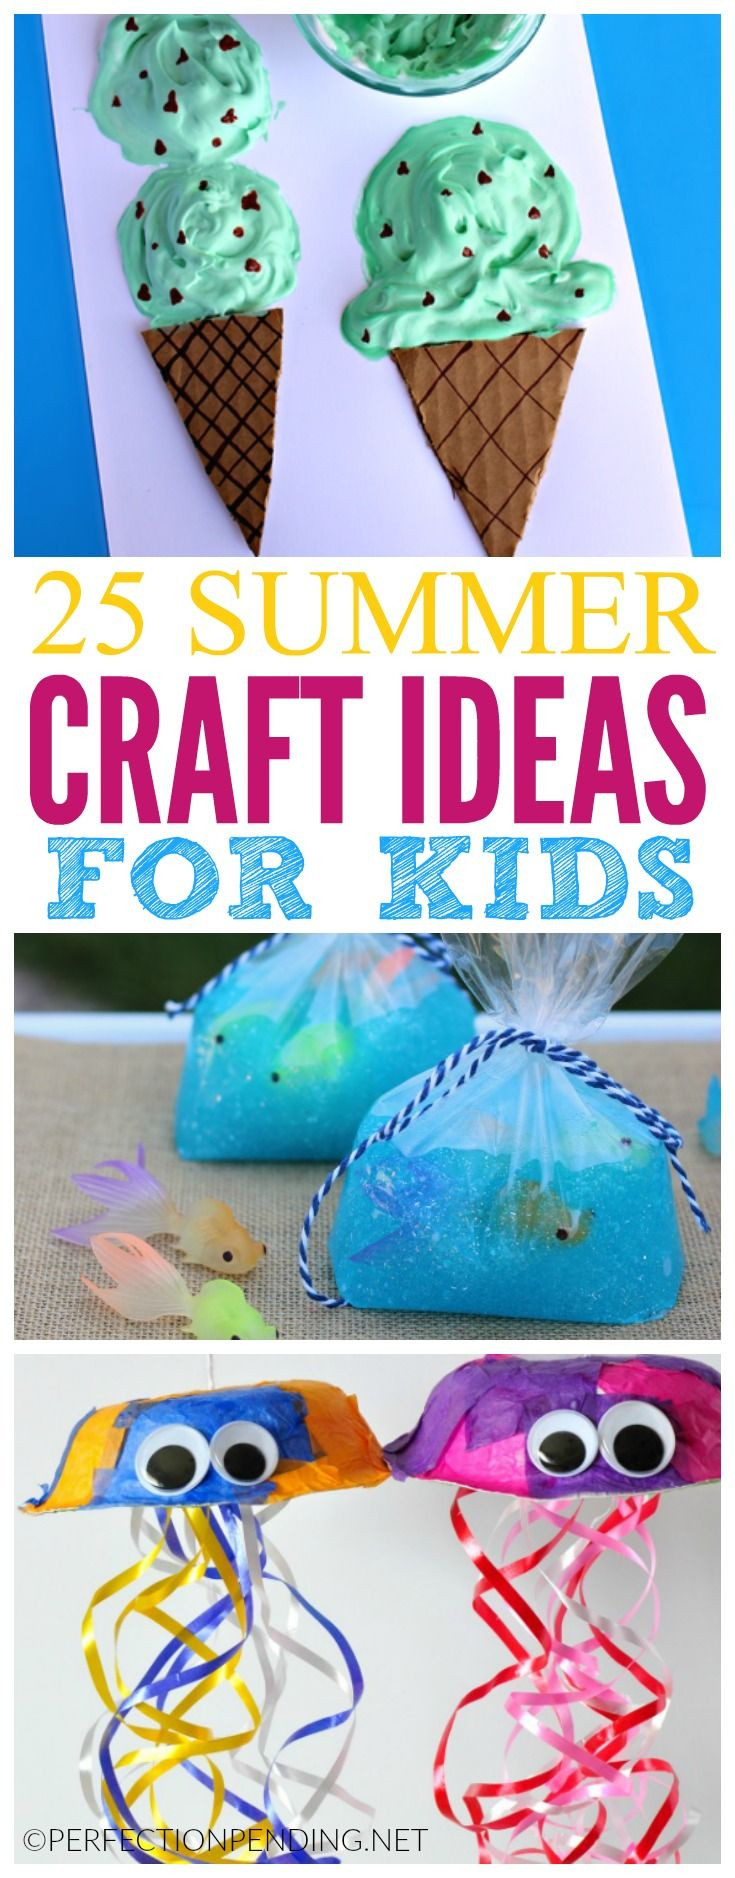 Best ideas about Summertime Craft Ideas
. Save or Pin 25 best ideas about Kid Crafts on Pinterest Now.